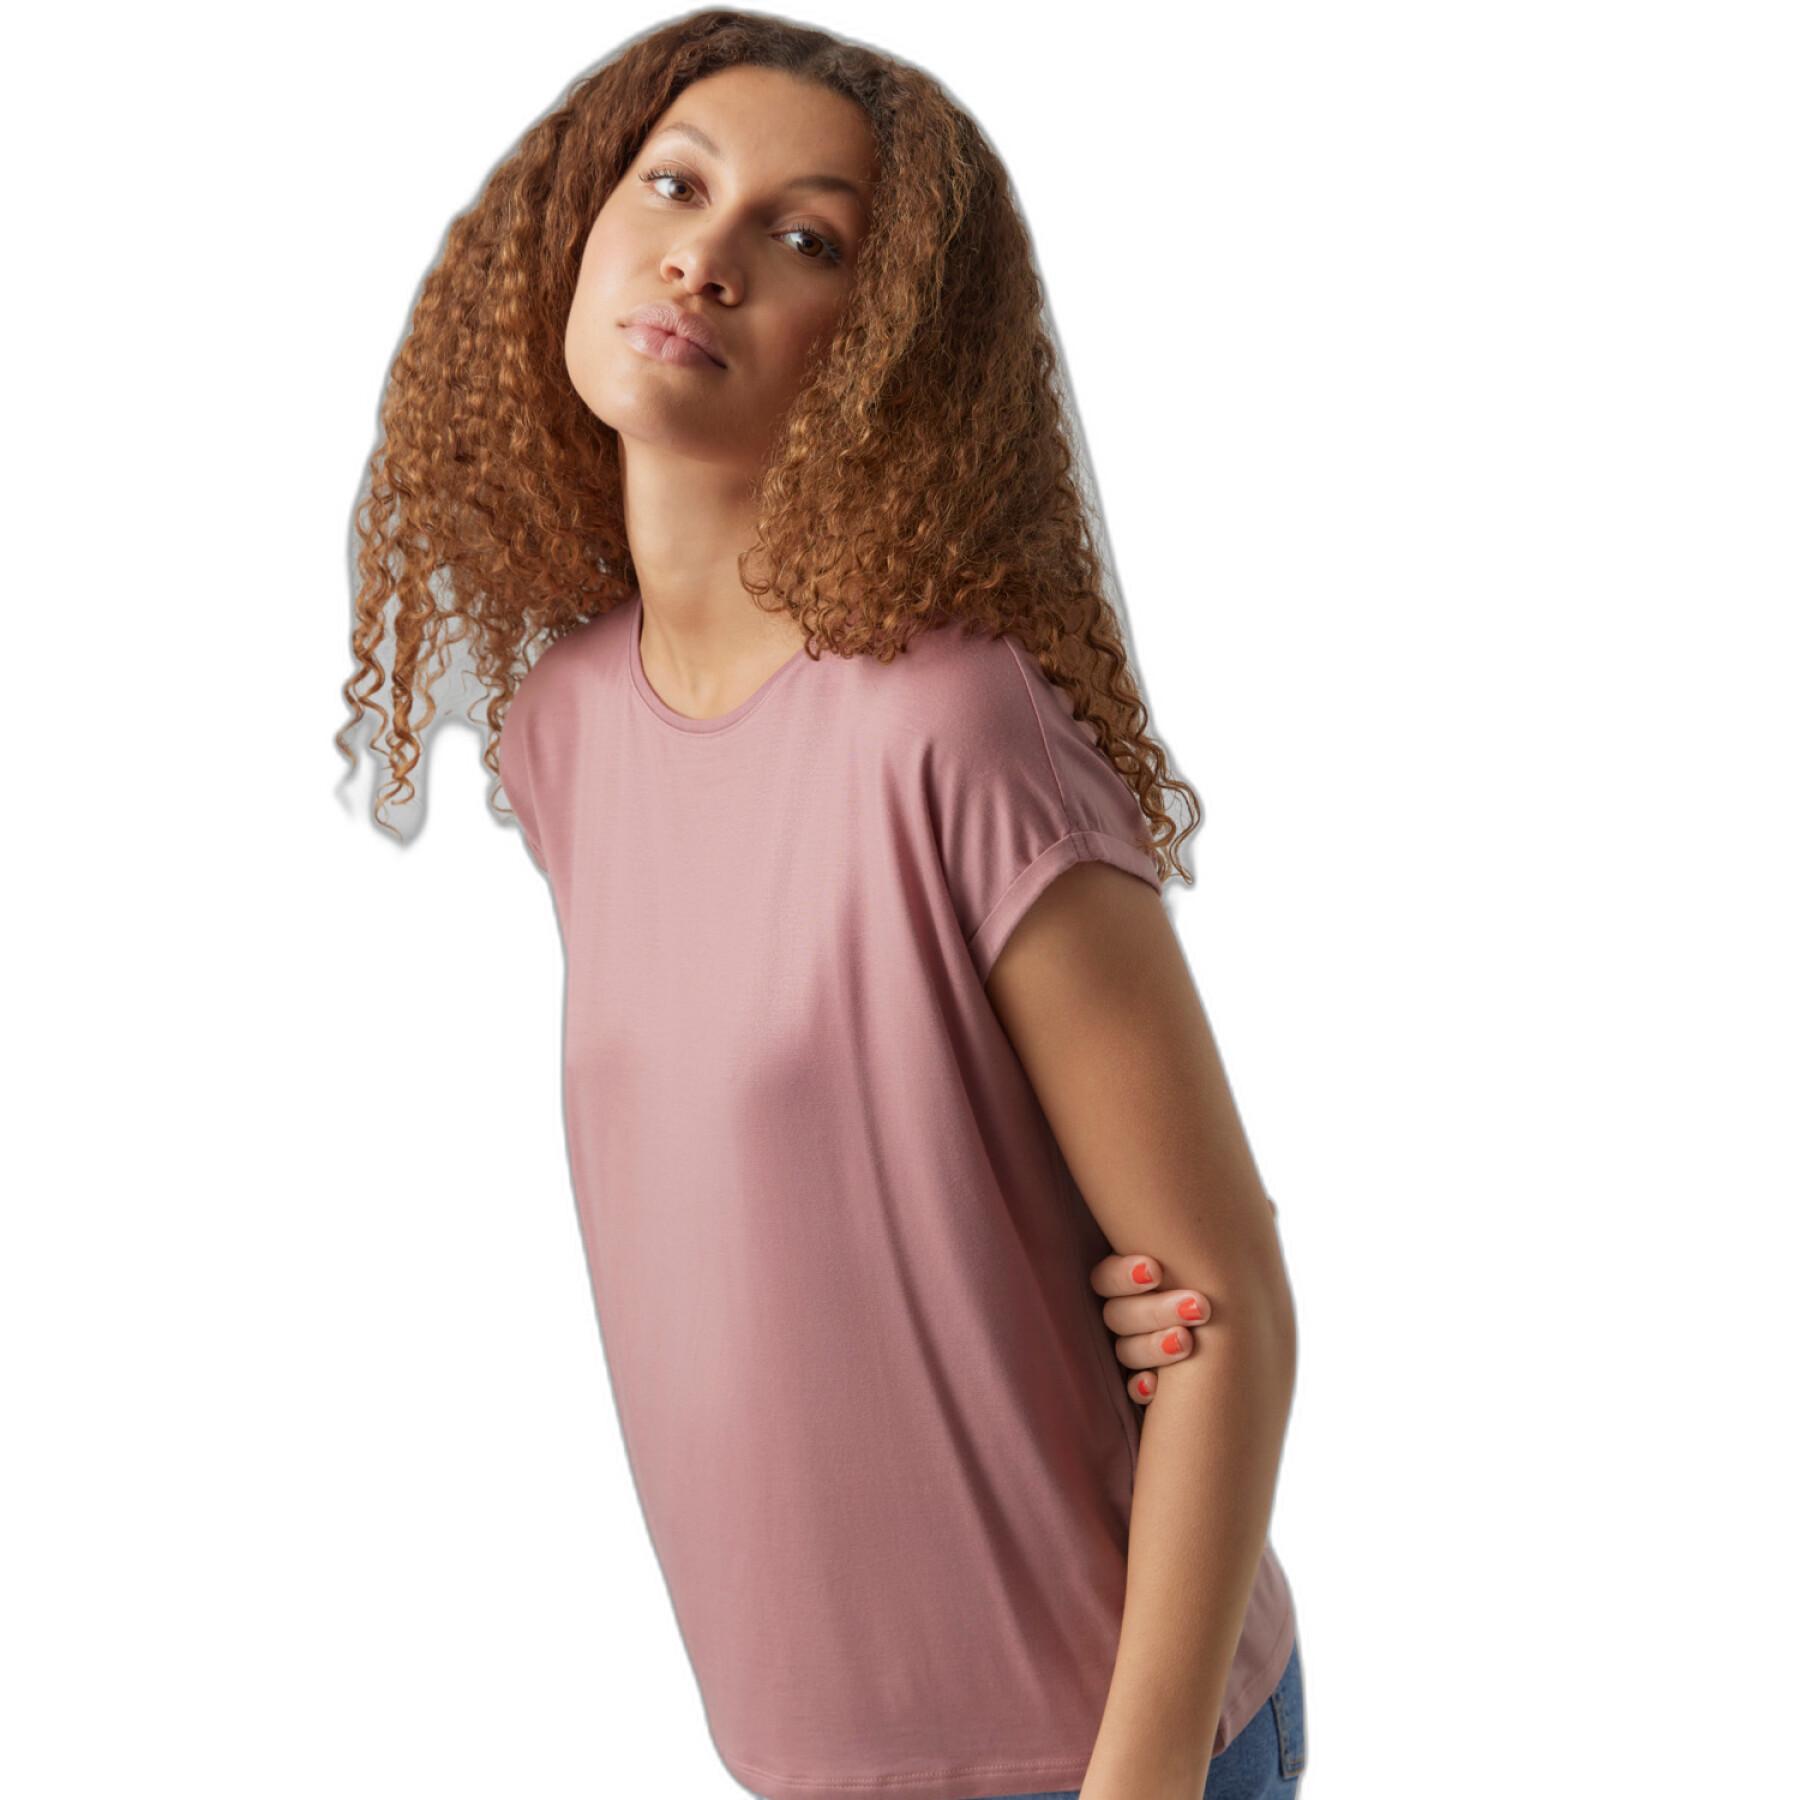 Camiseta de mujer Vero Moda Ava Plain